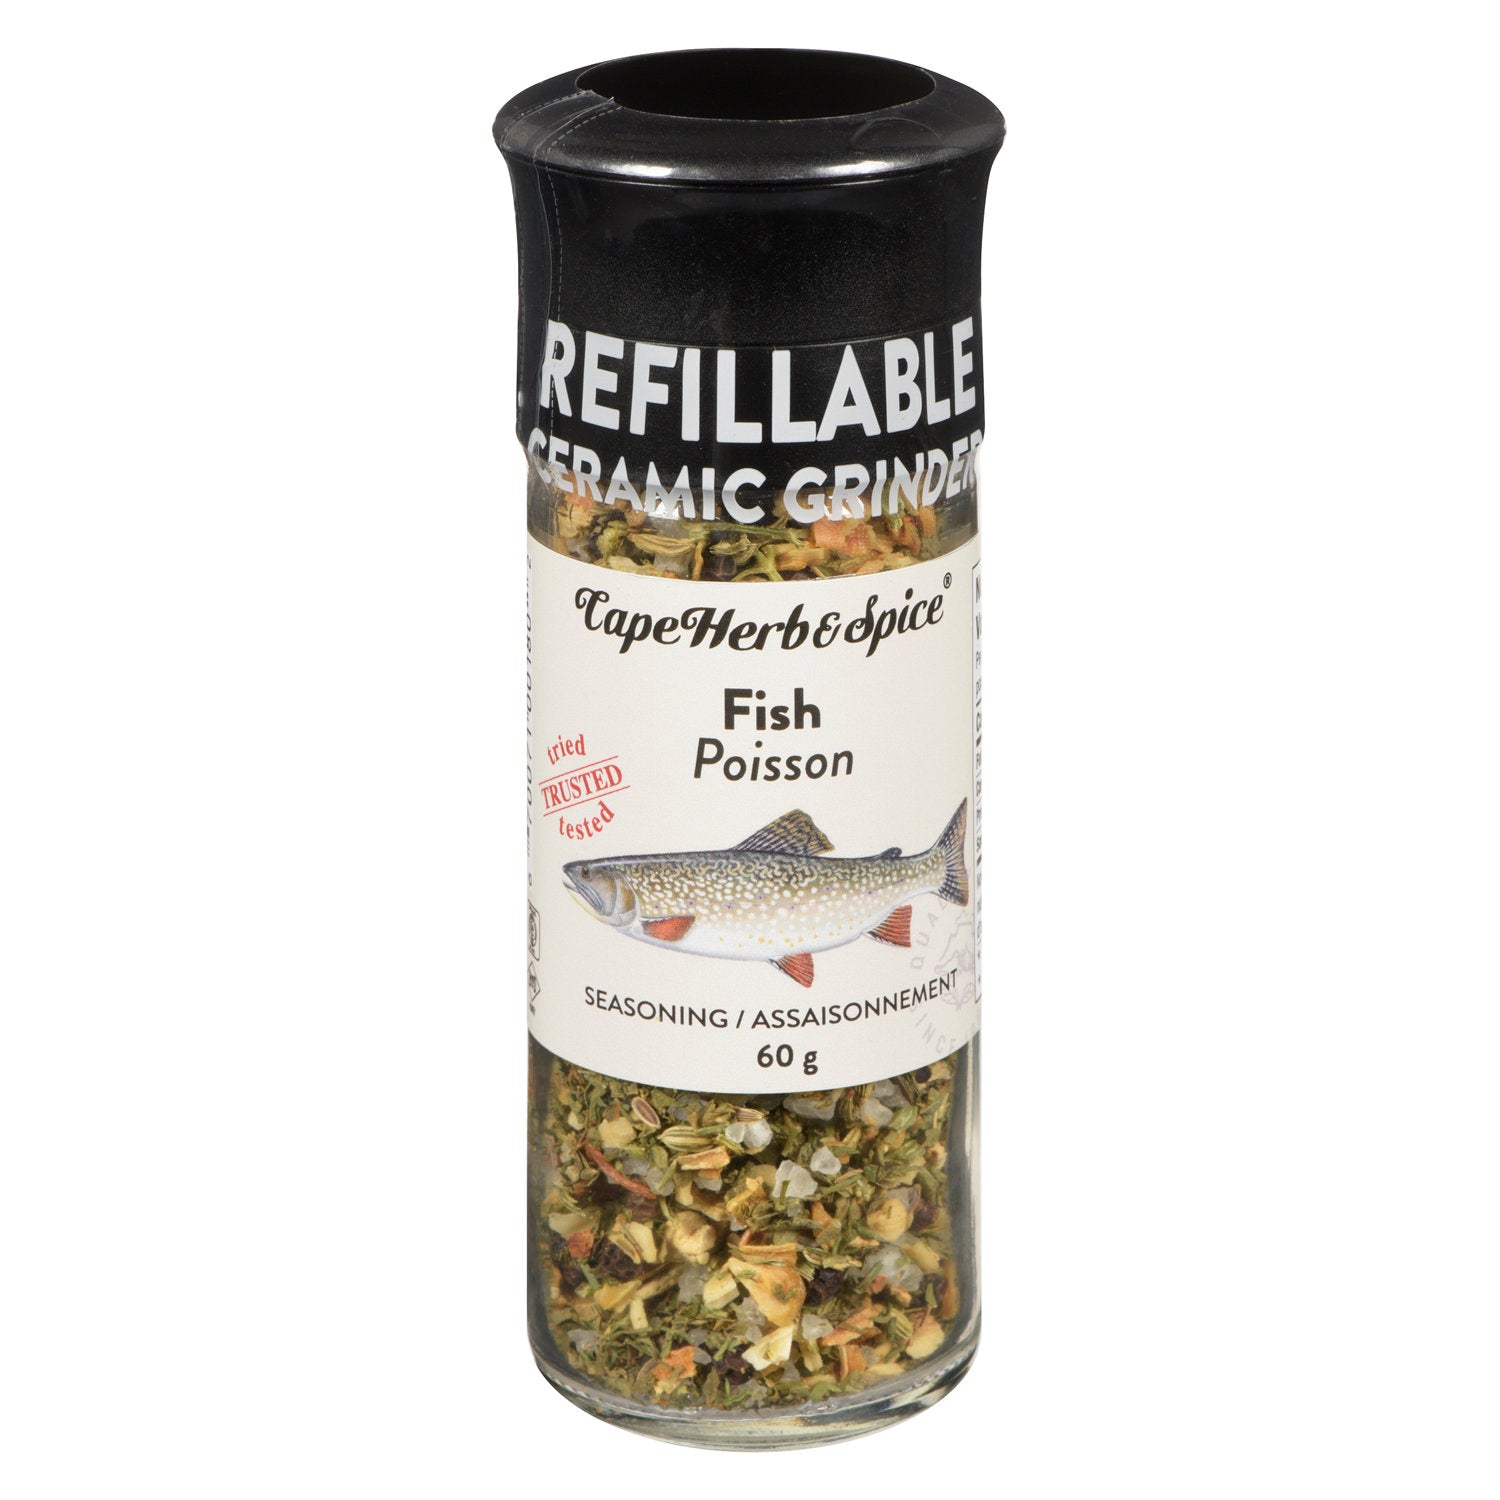 Fish Seasoning - Refillable Ceramic Grinder